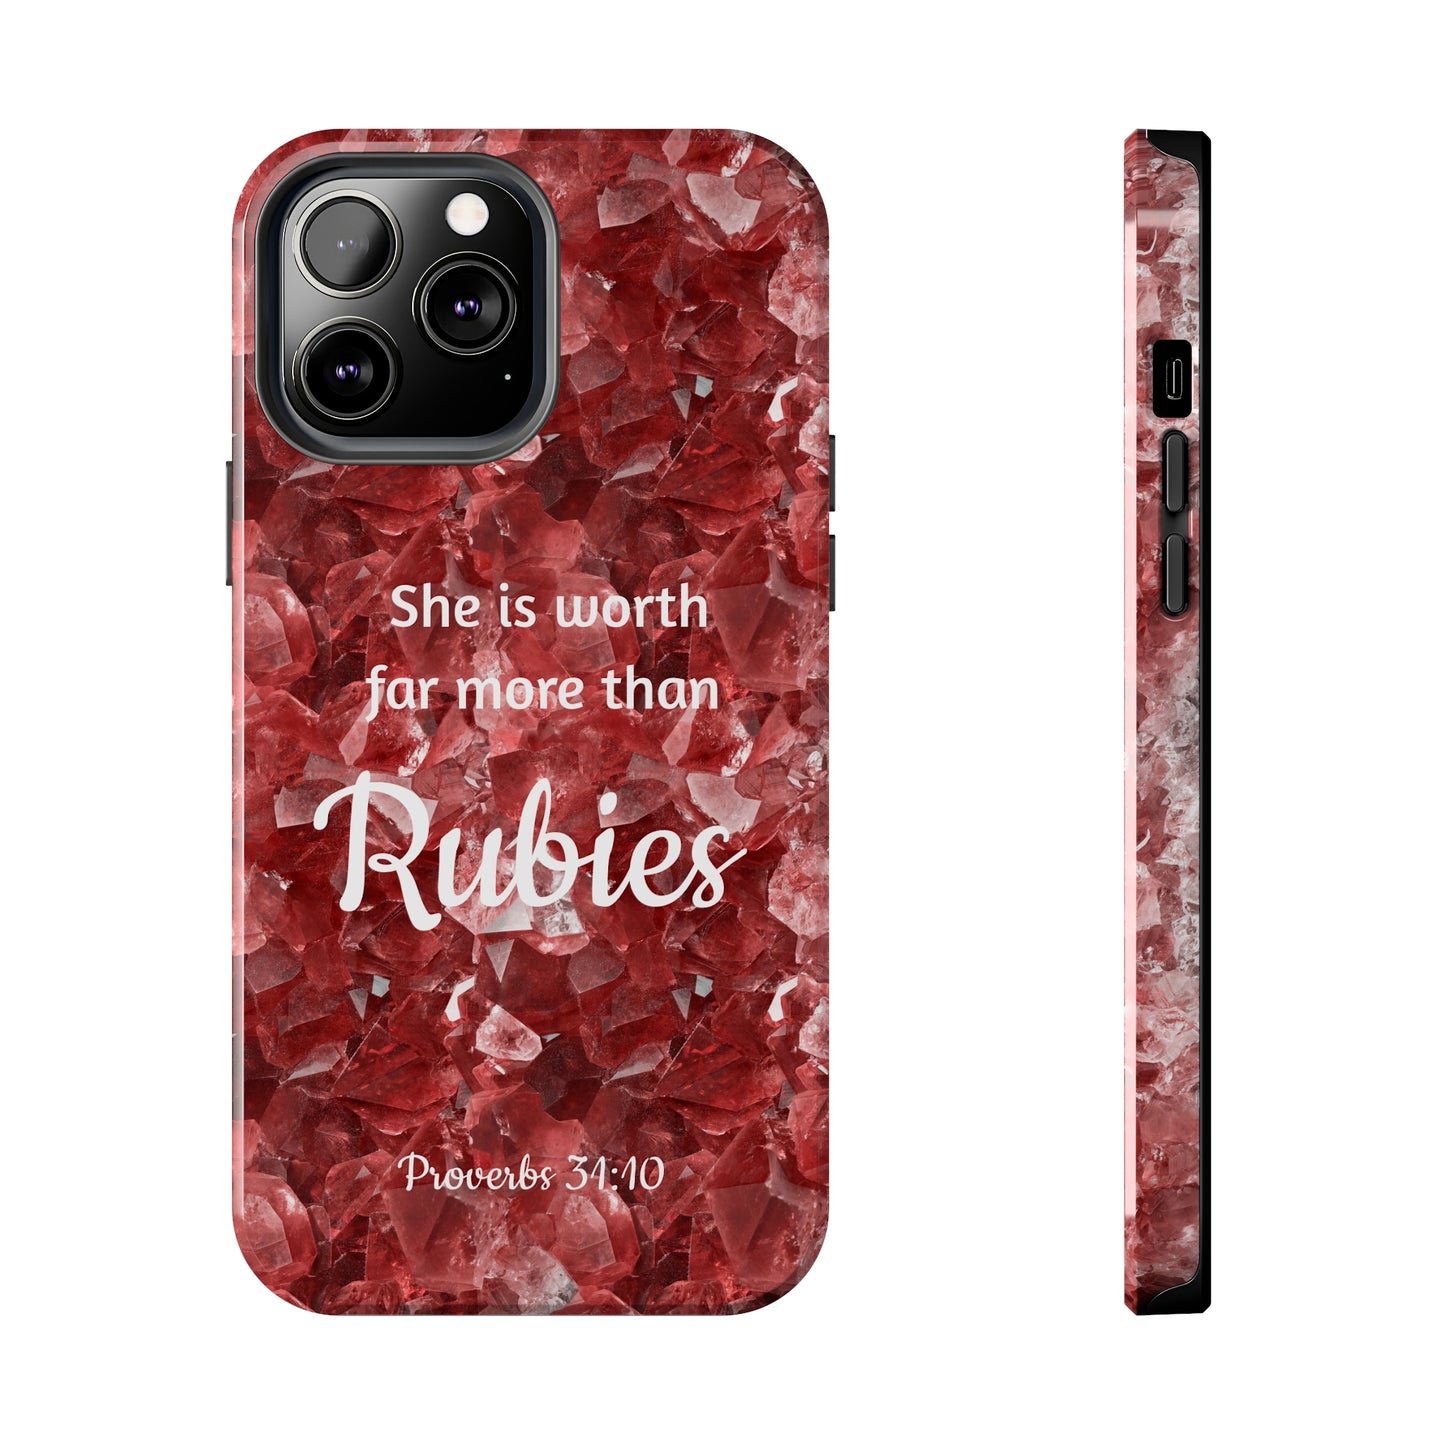 Rubies iPhone Case